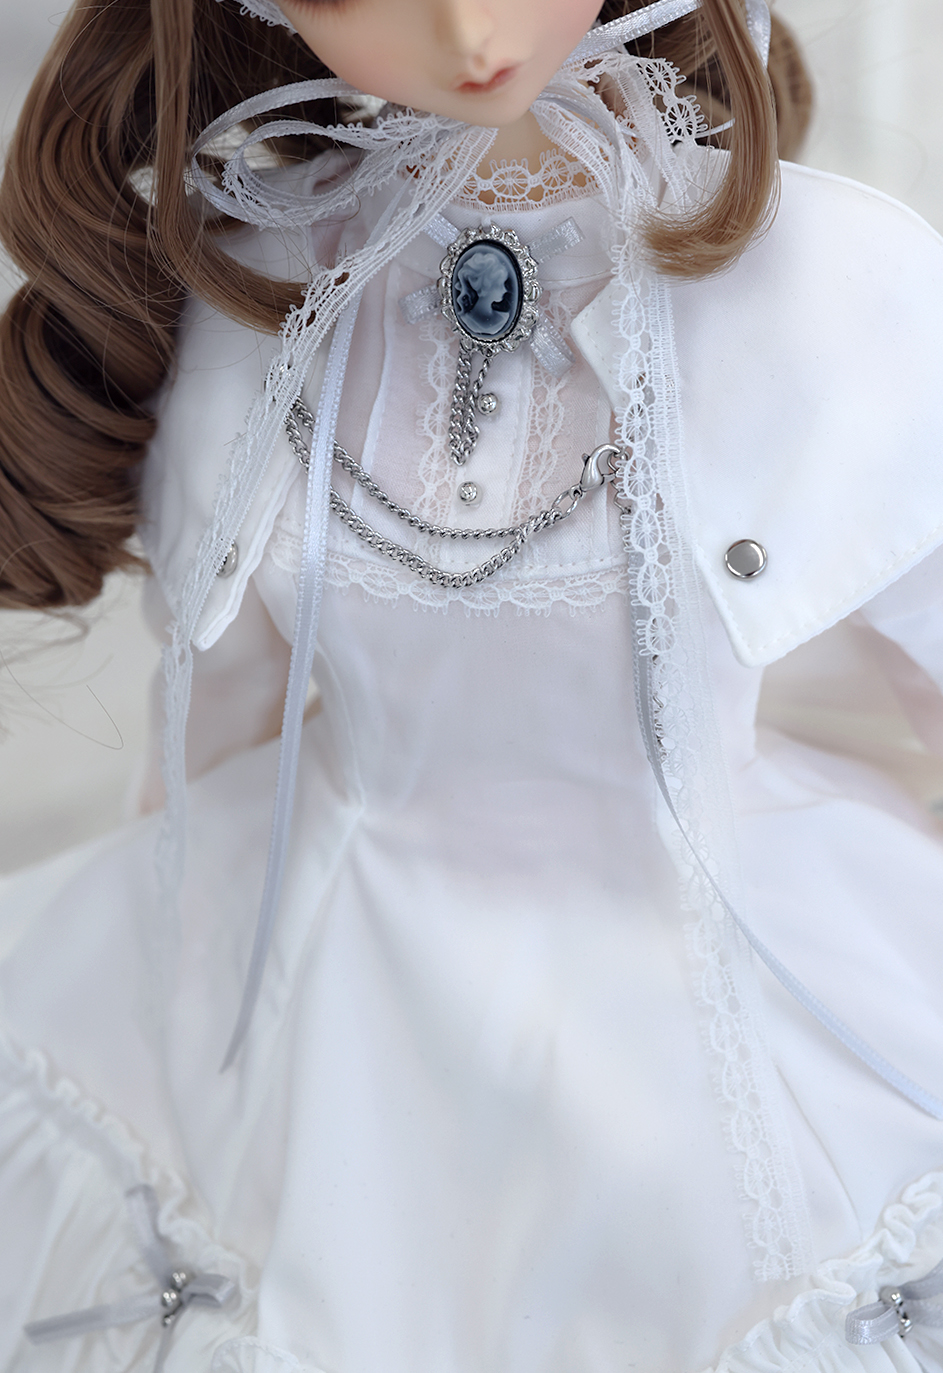 DOLK×NINE9 STYLE】Antique cape dress DOLK限定 WHITE - 60cm｜DOLK 